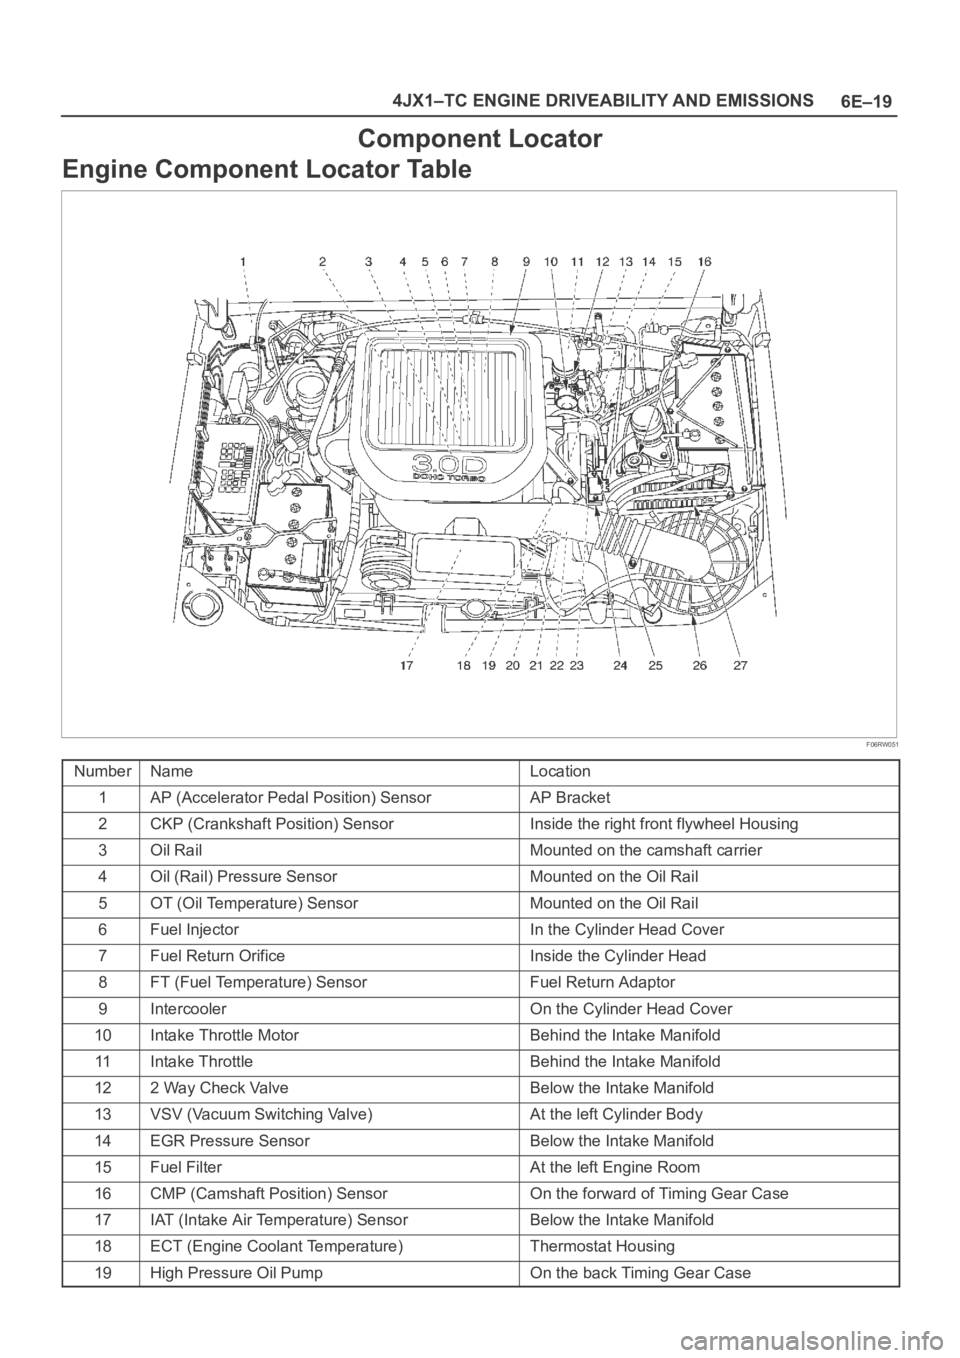 OPEL FRONTERA 1998  Workshop Manual 6E–19 4JX1–TC ENGINE DRIVEABILITY AND EMISSIONS
Component Locator
Engine Component Locator Table
F06RW051
NumberNameLocation
1AP (Accelerator Pedal Position) SensorAP Bracket
2CKP (Crankshaft Posi